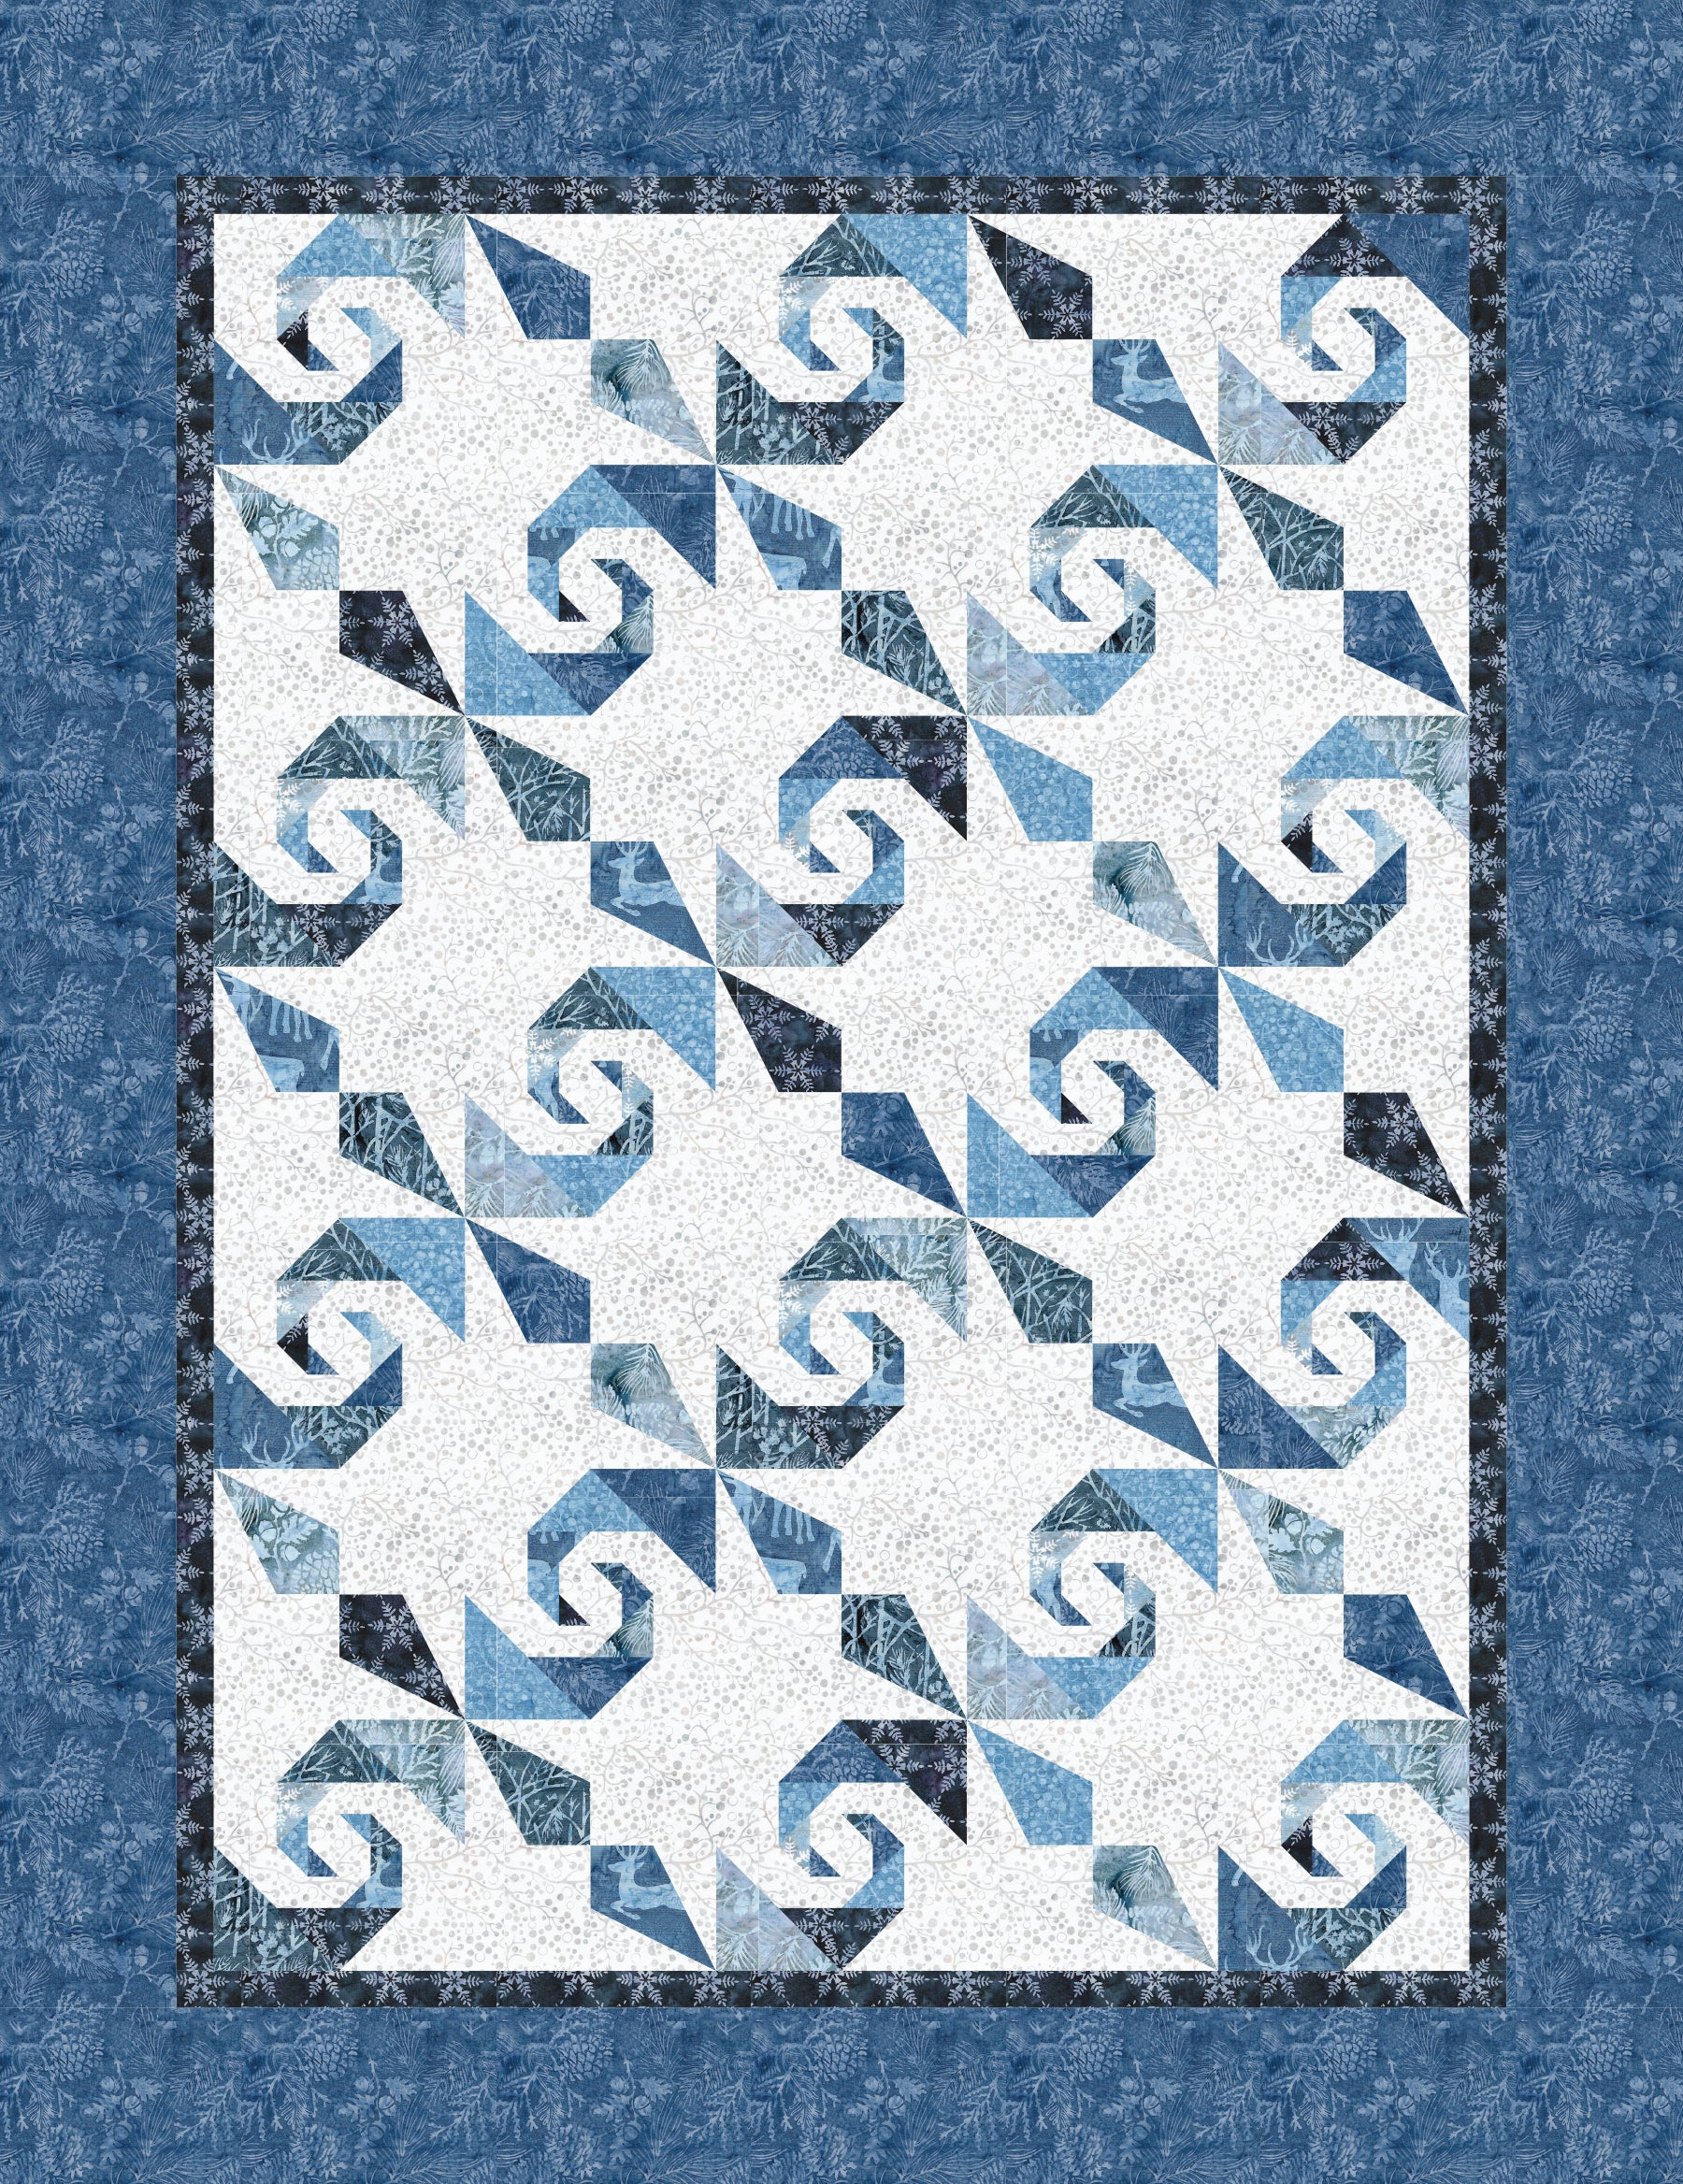 Snail's Trail Quilt Blocks using AccuQuilt GO! dies – blue feather quilt  studio